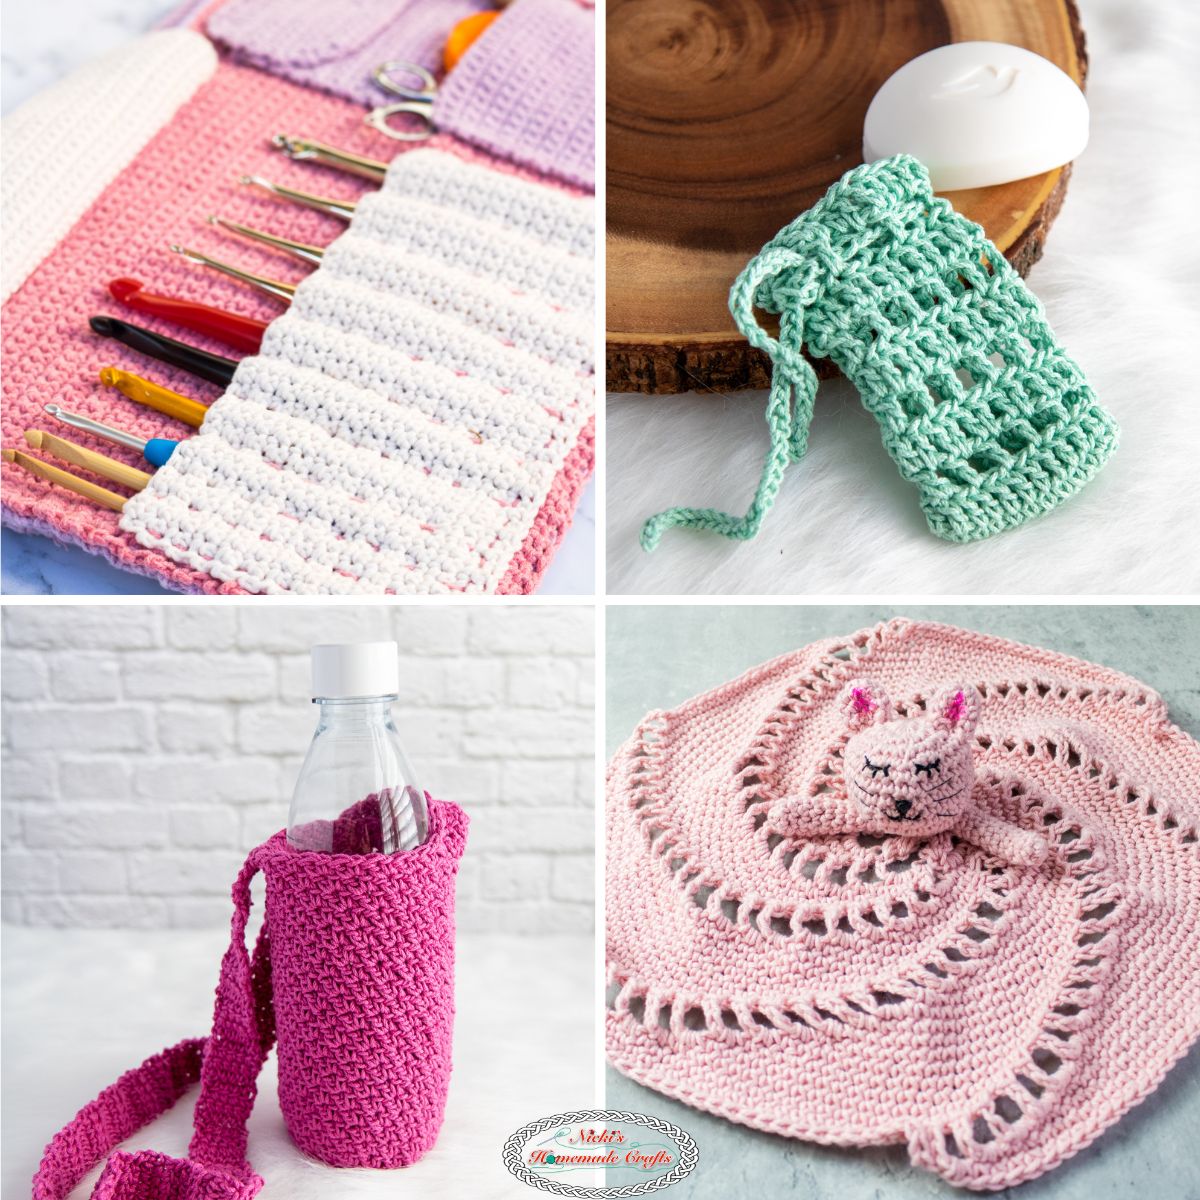 10 FREE Patterns Using Cotton Yarn for Crochet - Nicki's Homemade Crafts